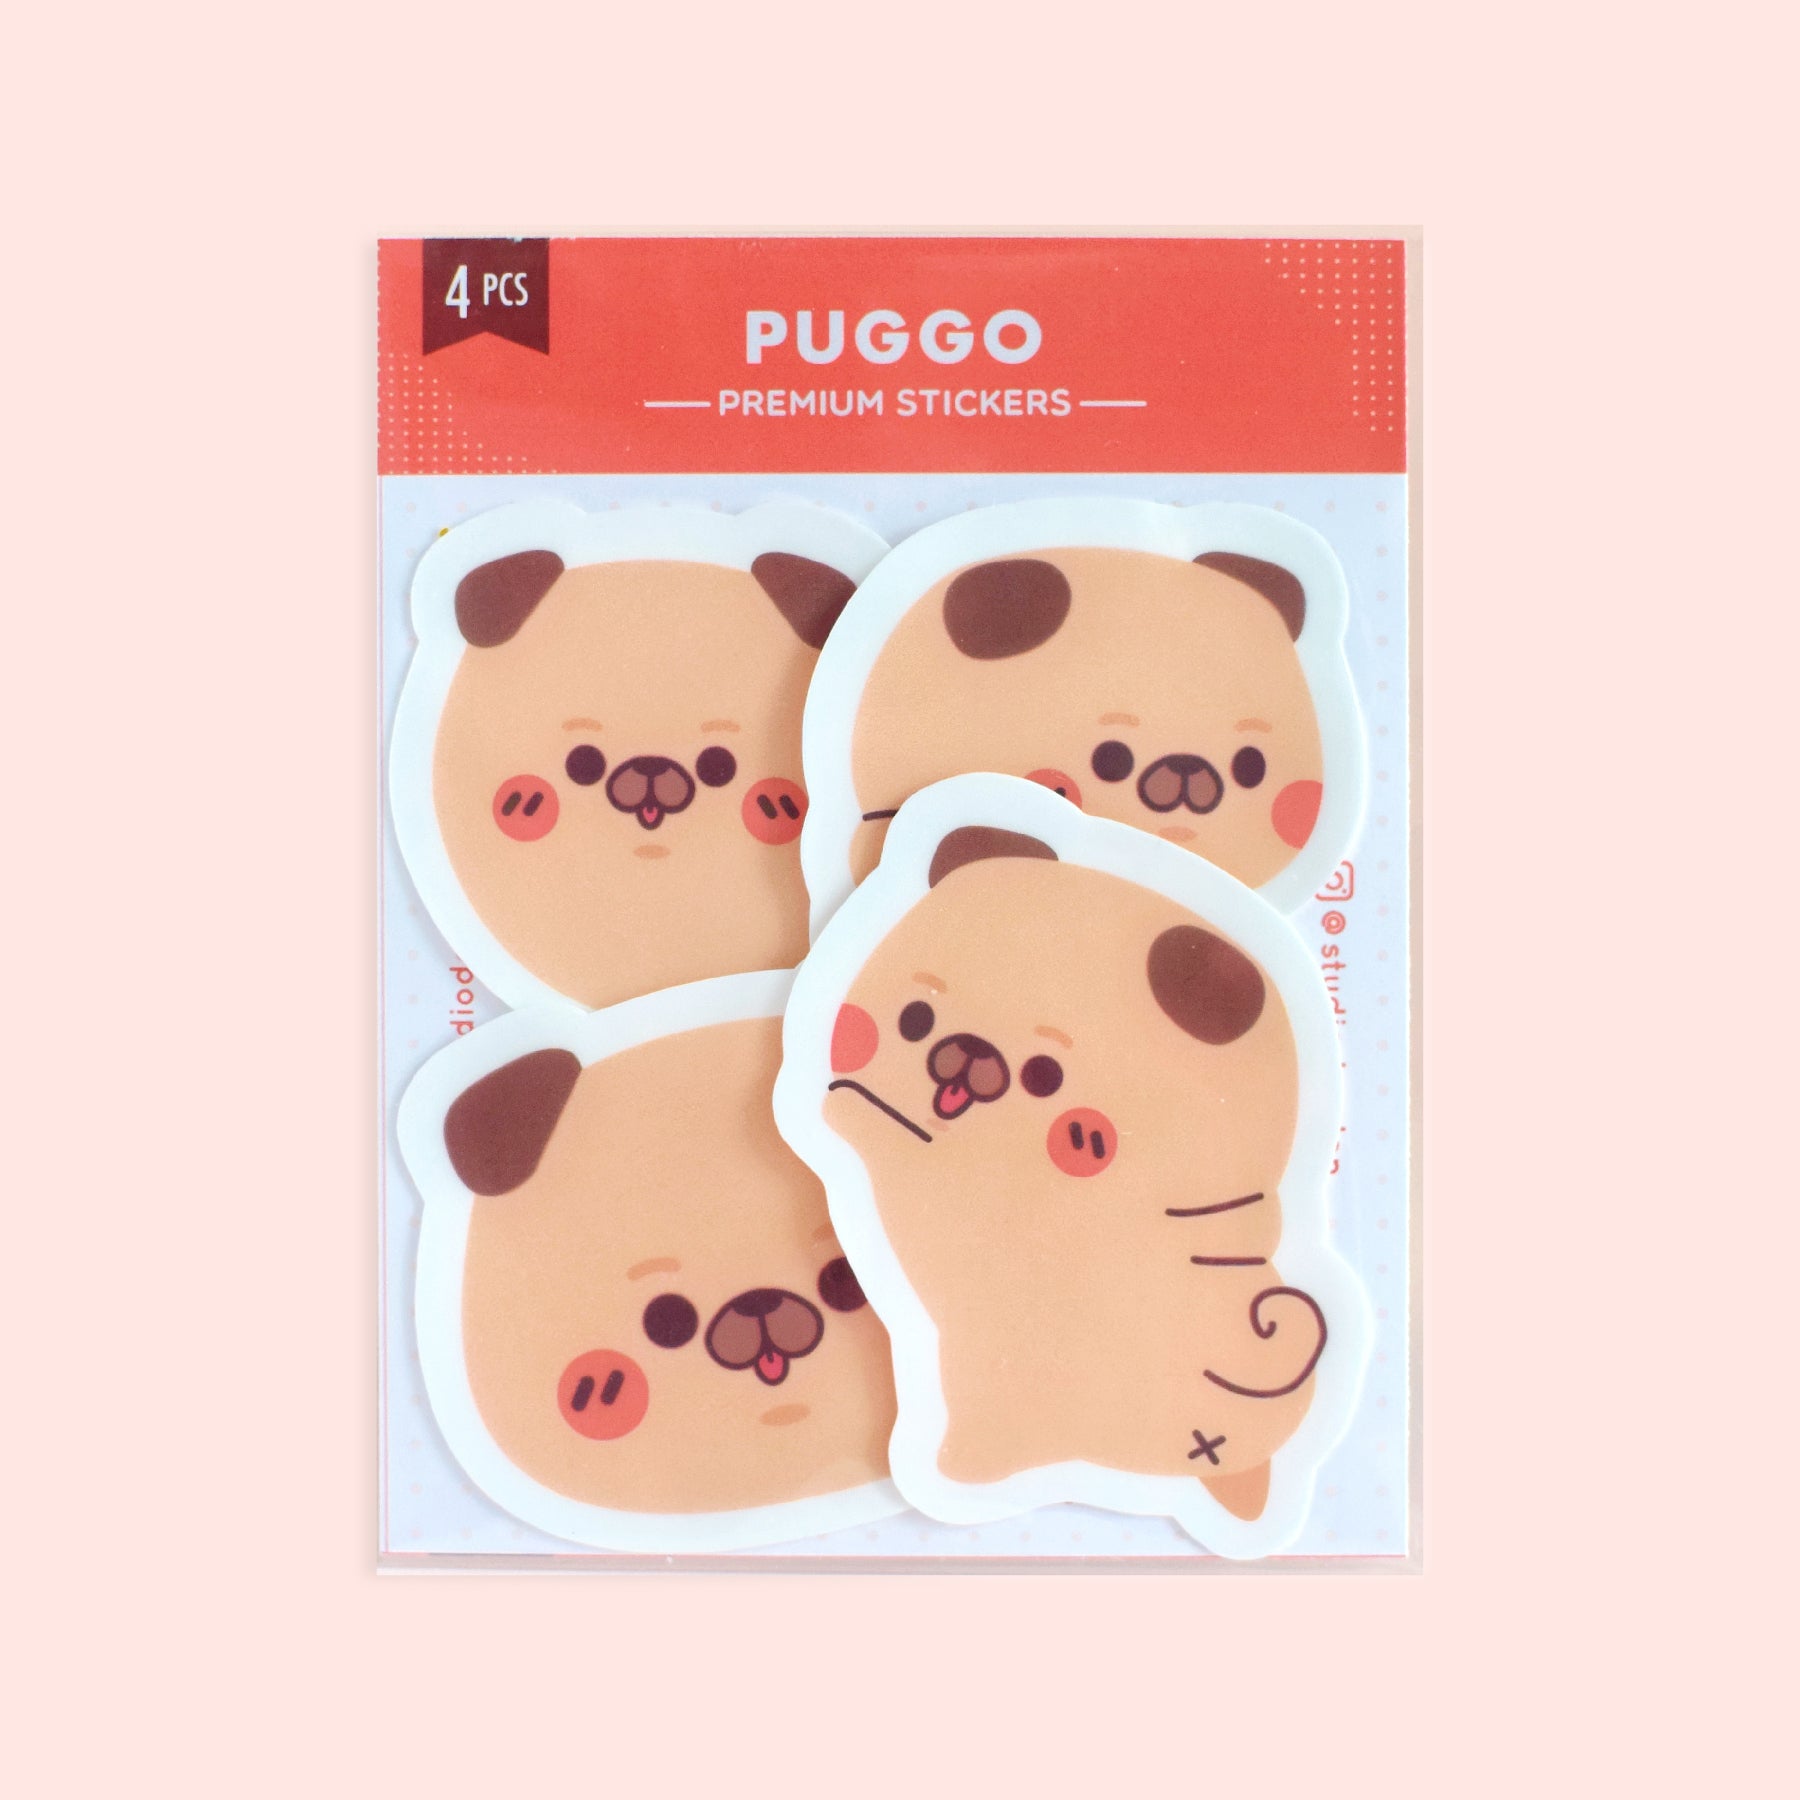 Puggo Pug Dog Vinyl Matte Laminated Sticker Pack